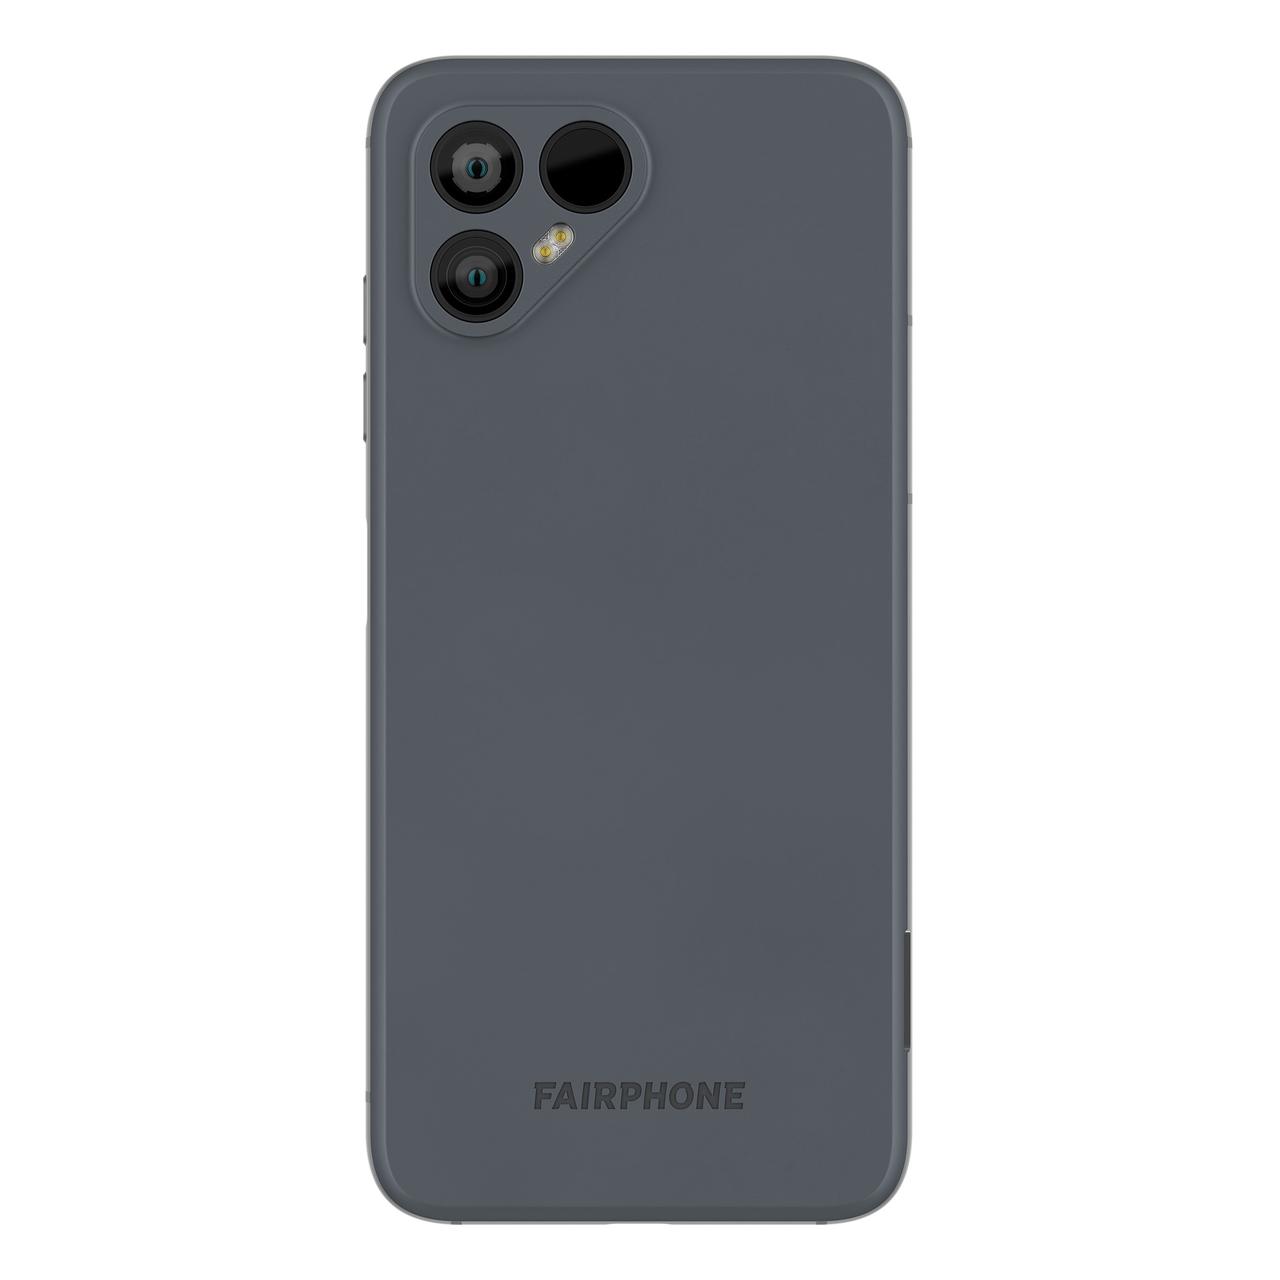 Fairphone 4 in grau / anthrazit back